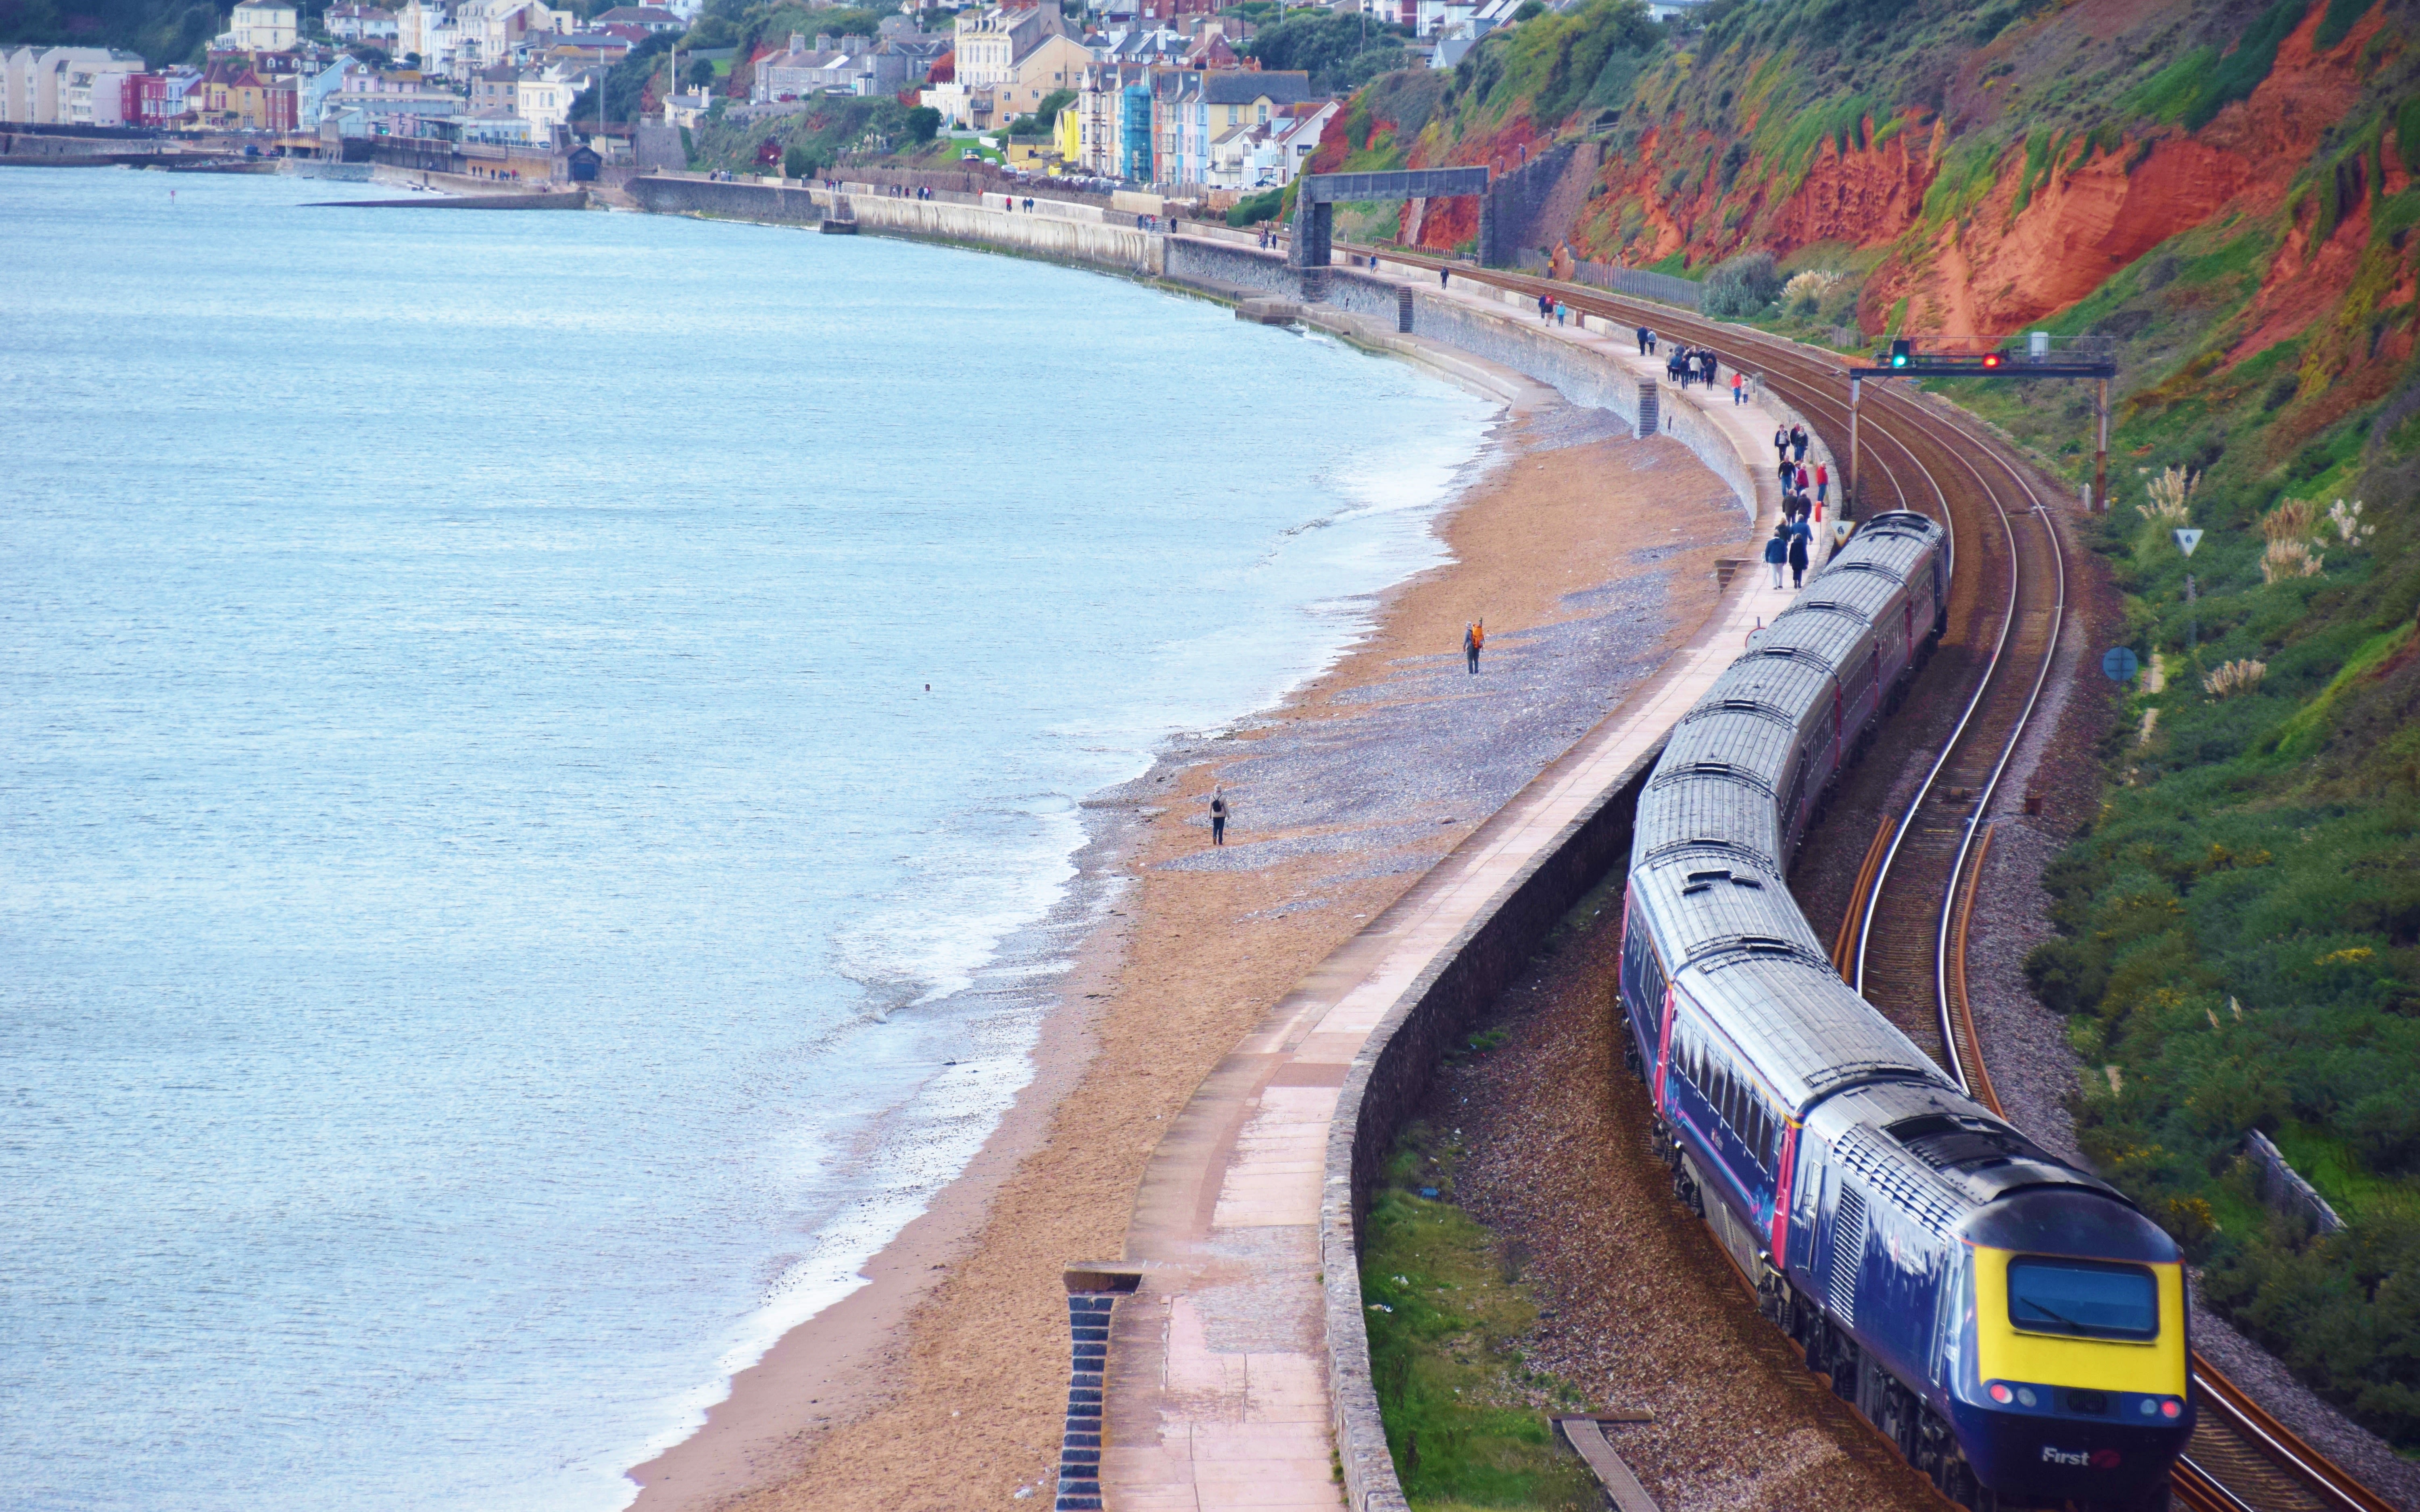 An image of a train passing through Dawlish in Devon.